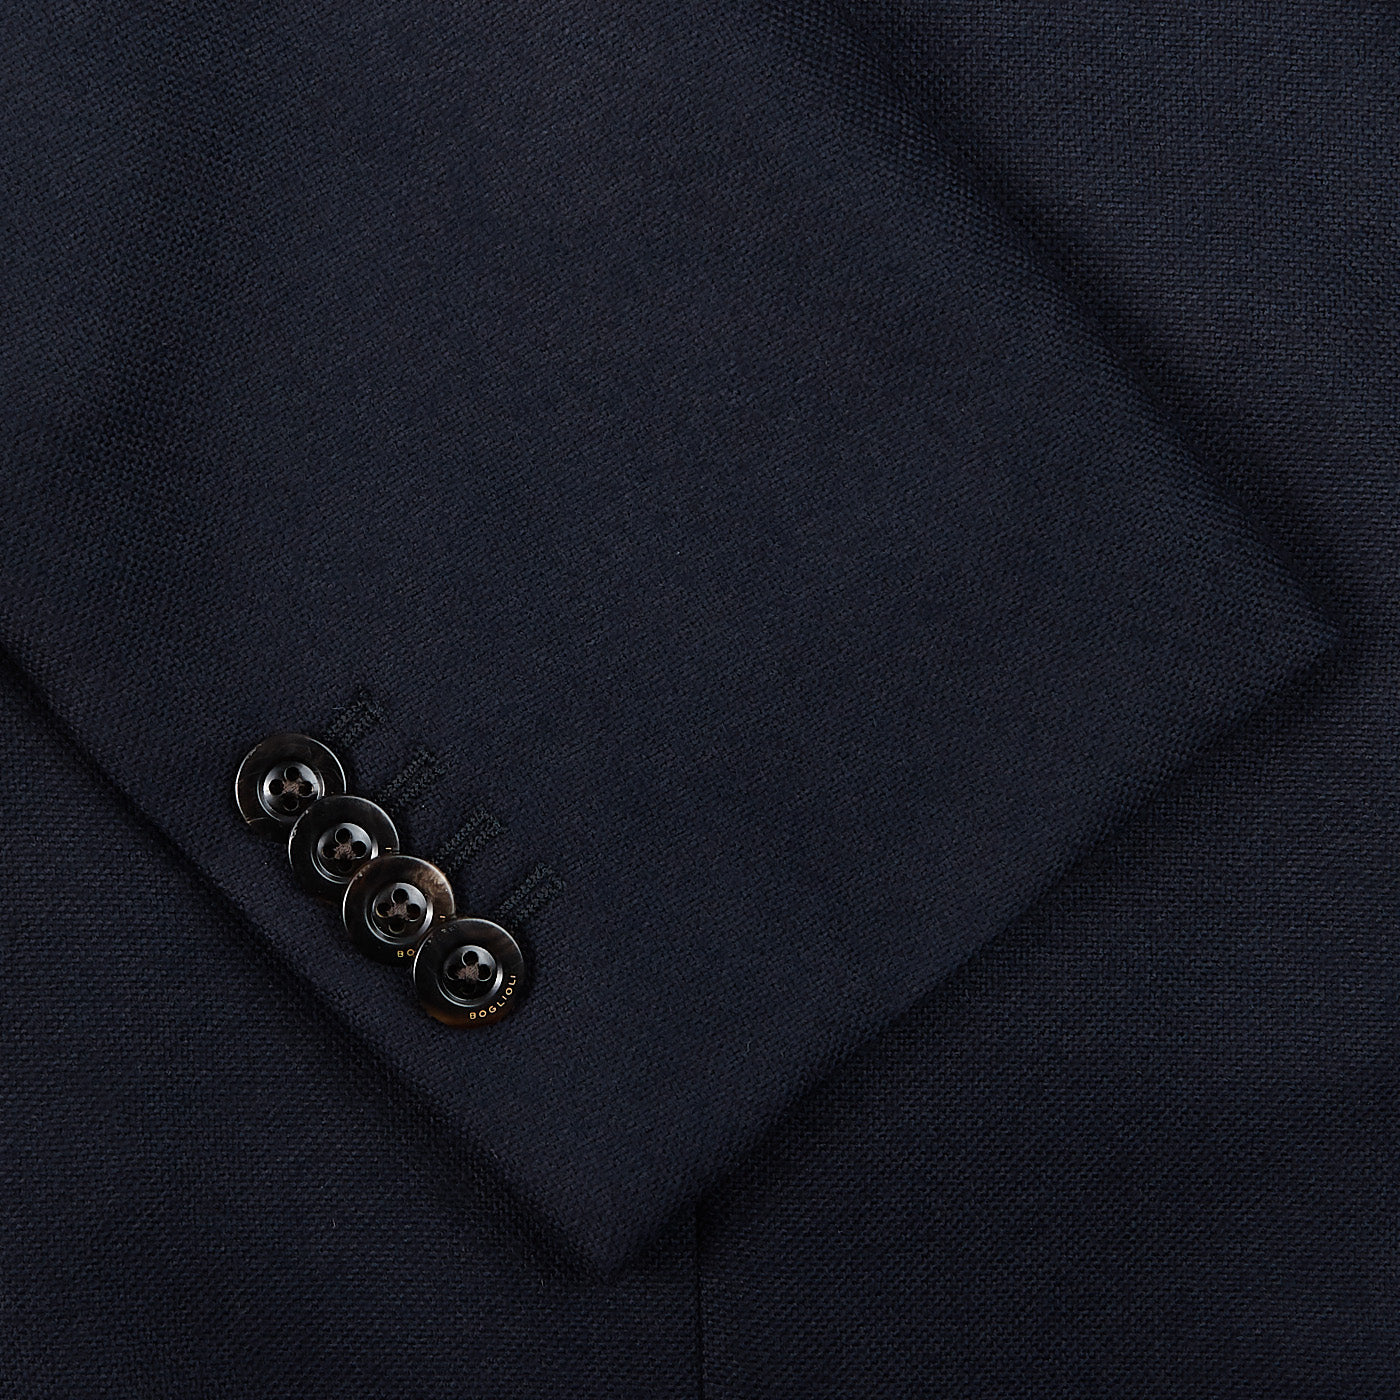 Boglioli Navy Blue Virgin Wool K Jacket Cuff